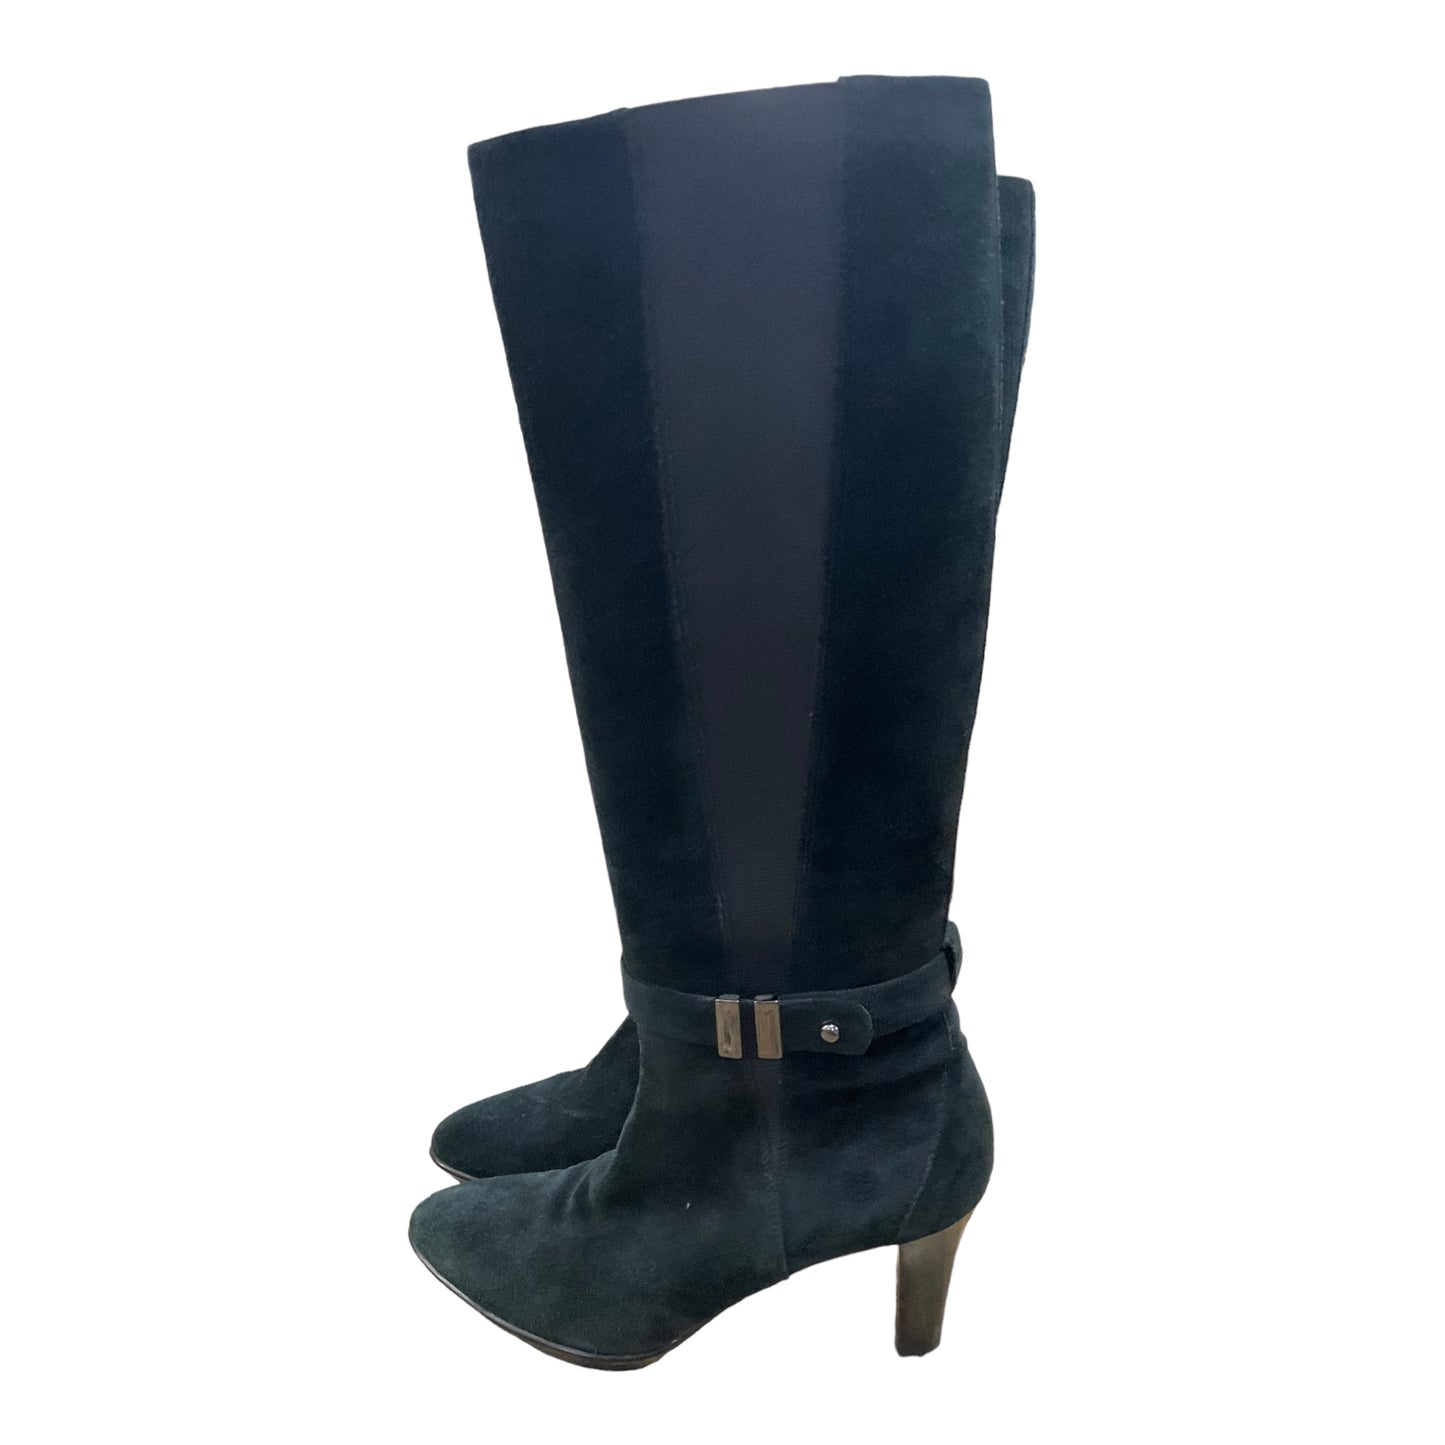 Boots Knee Heels By Aquatalia  Size: 8.5